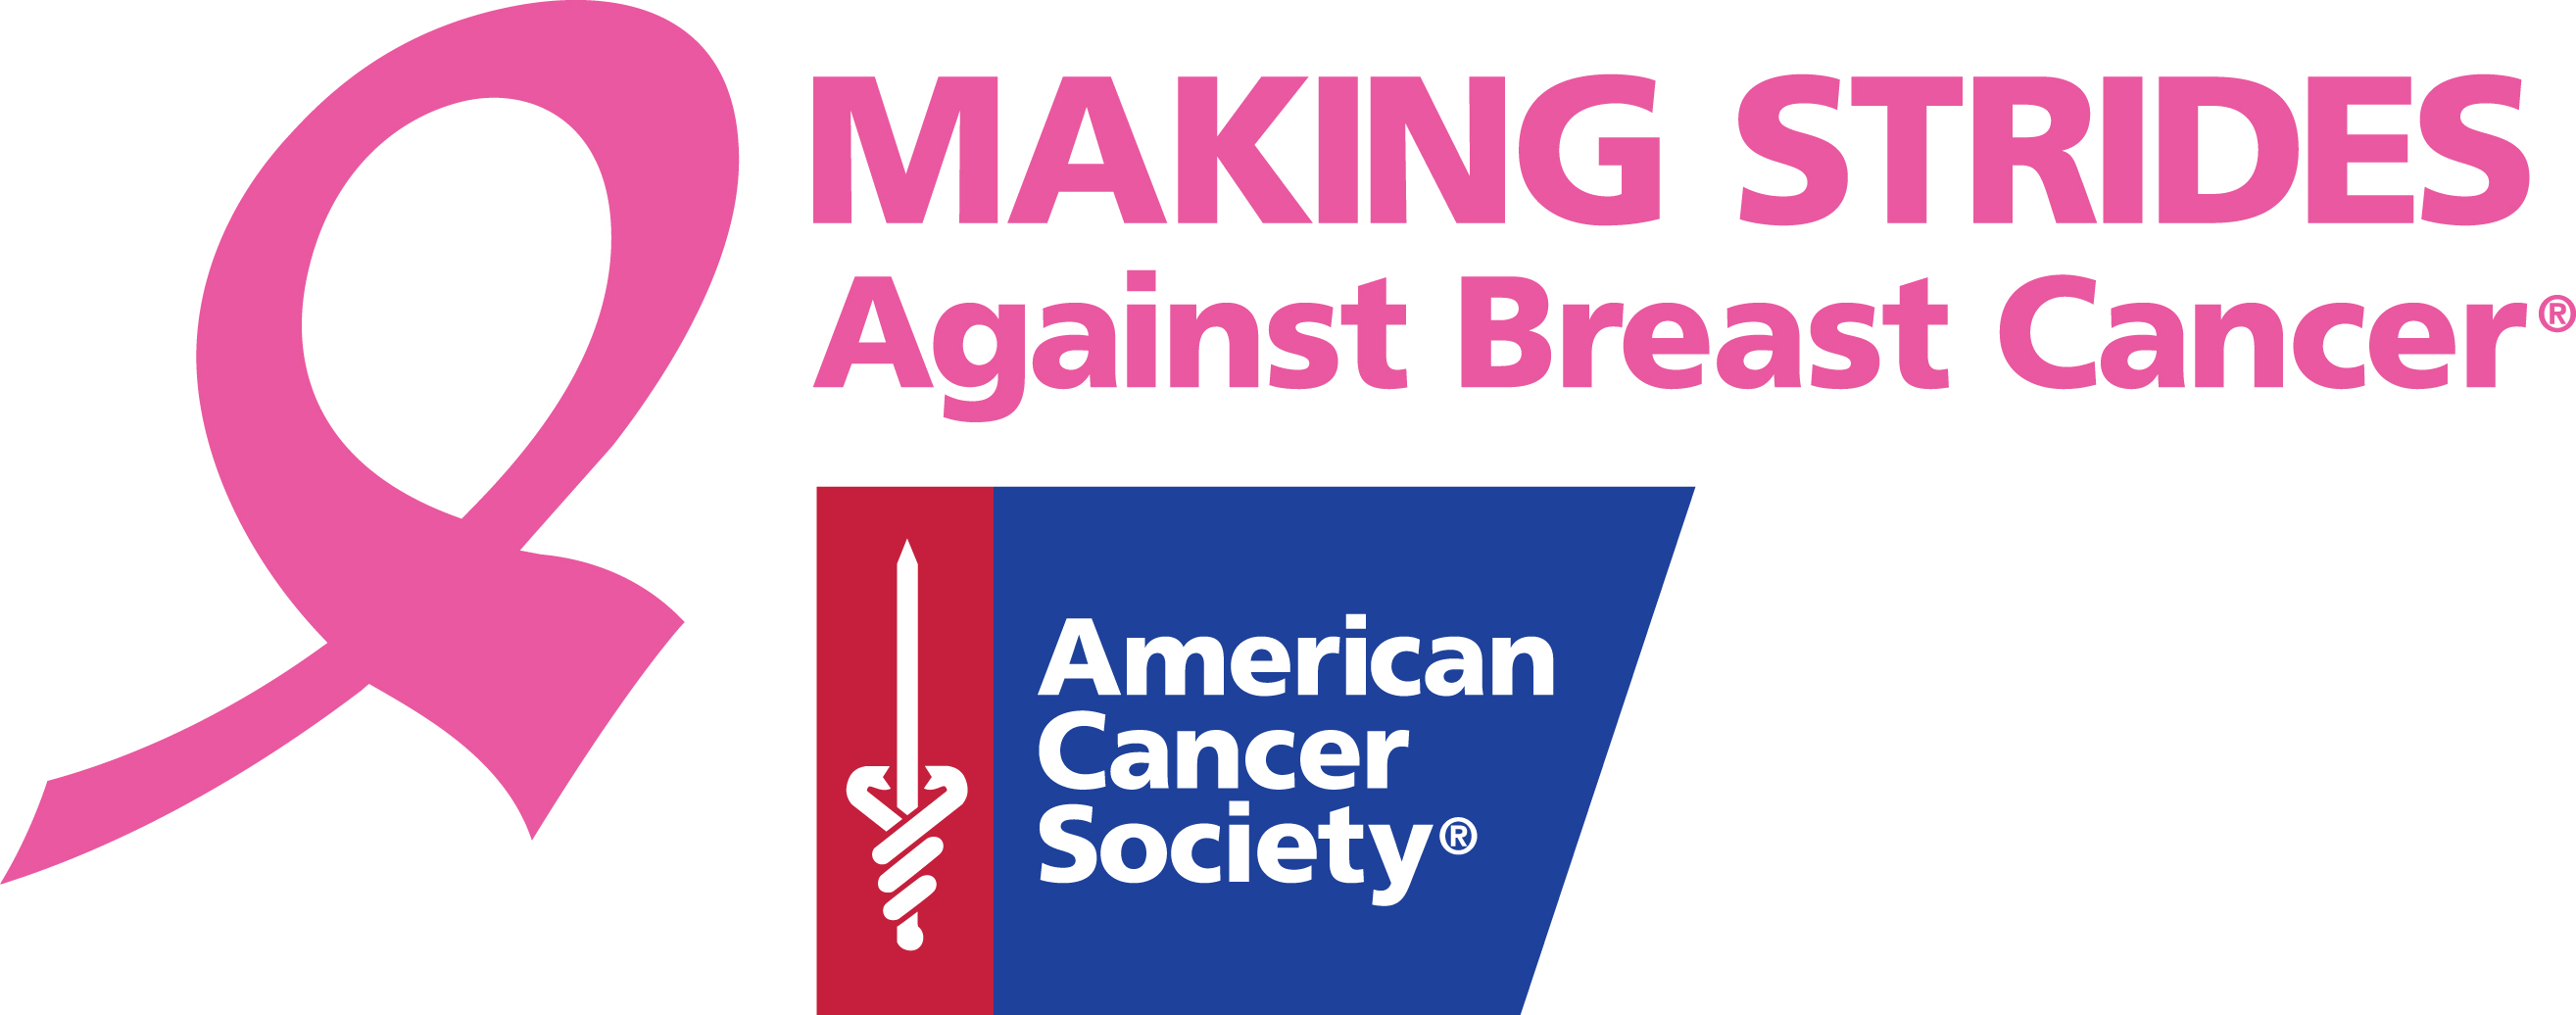 hoboken-girl-making-strides-breast-cancer-jc